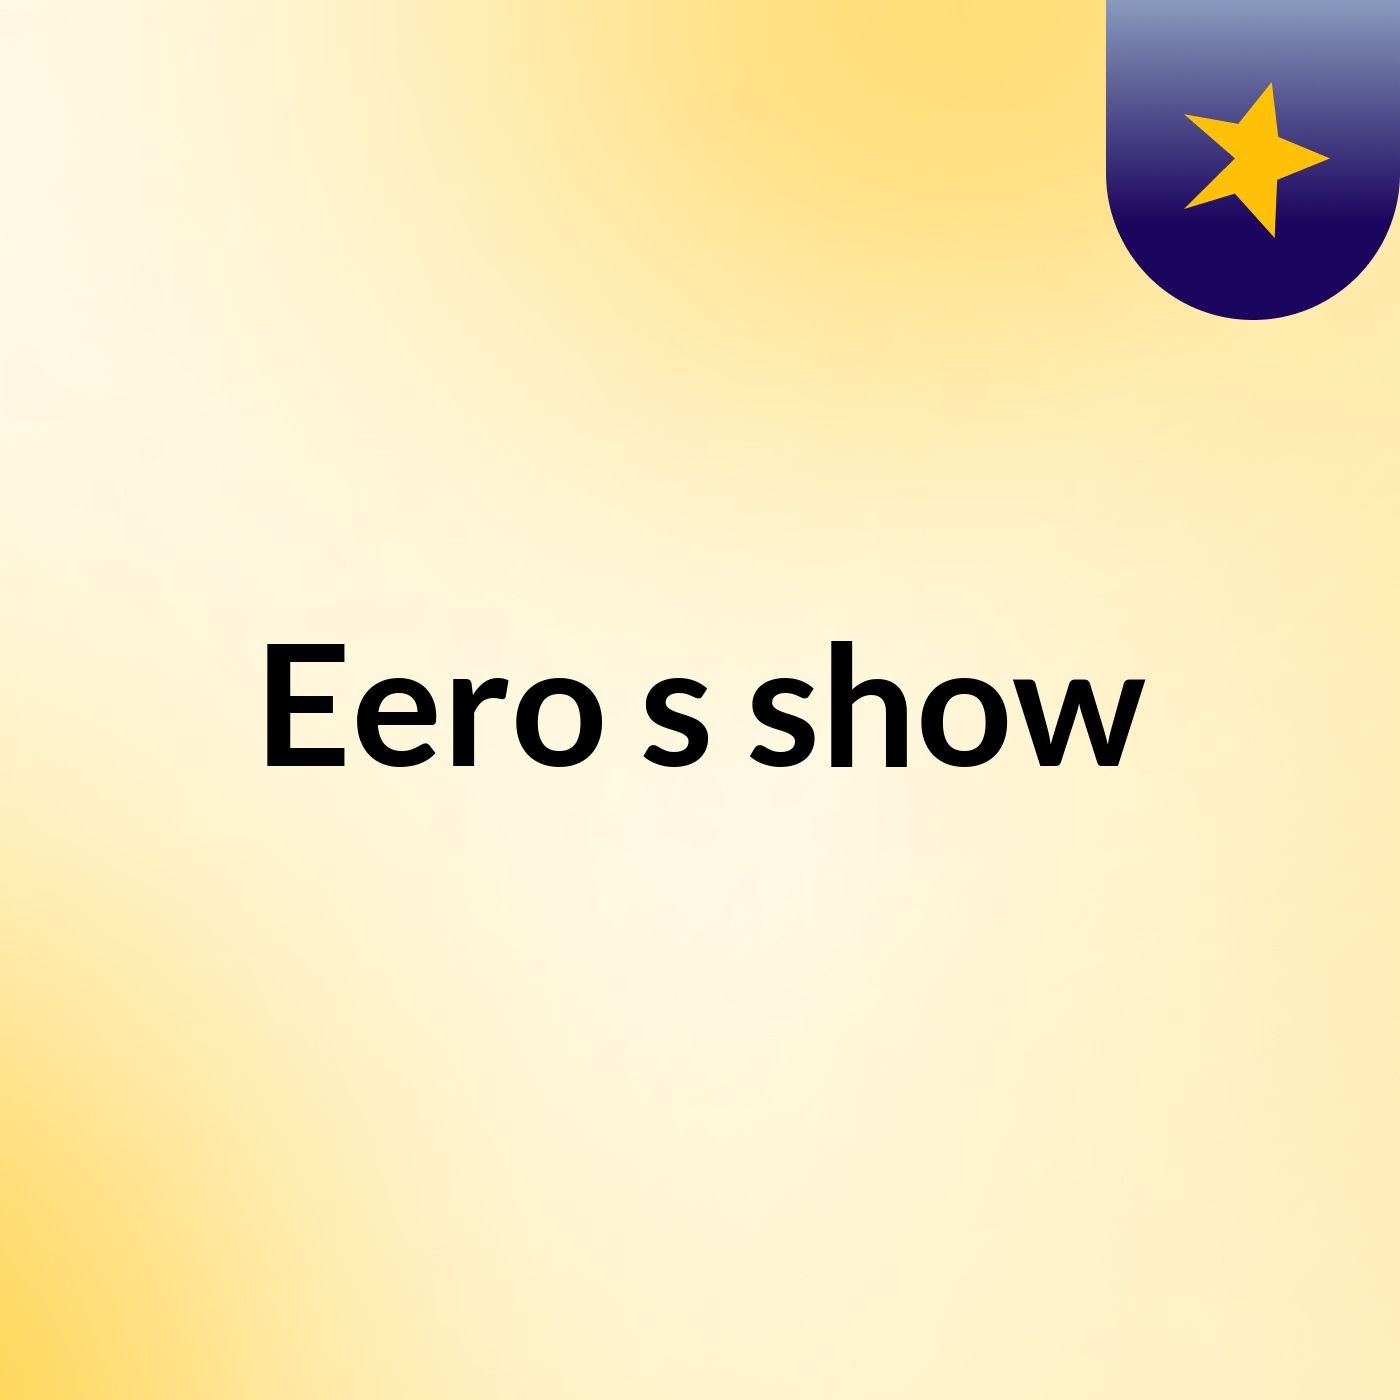 Eero's show